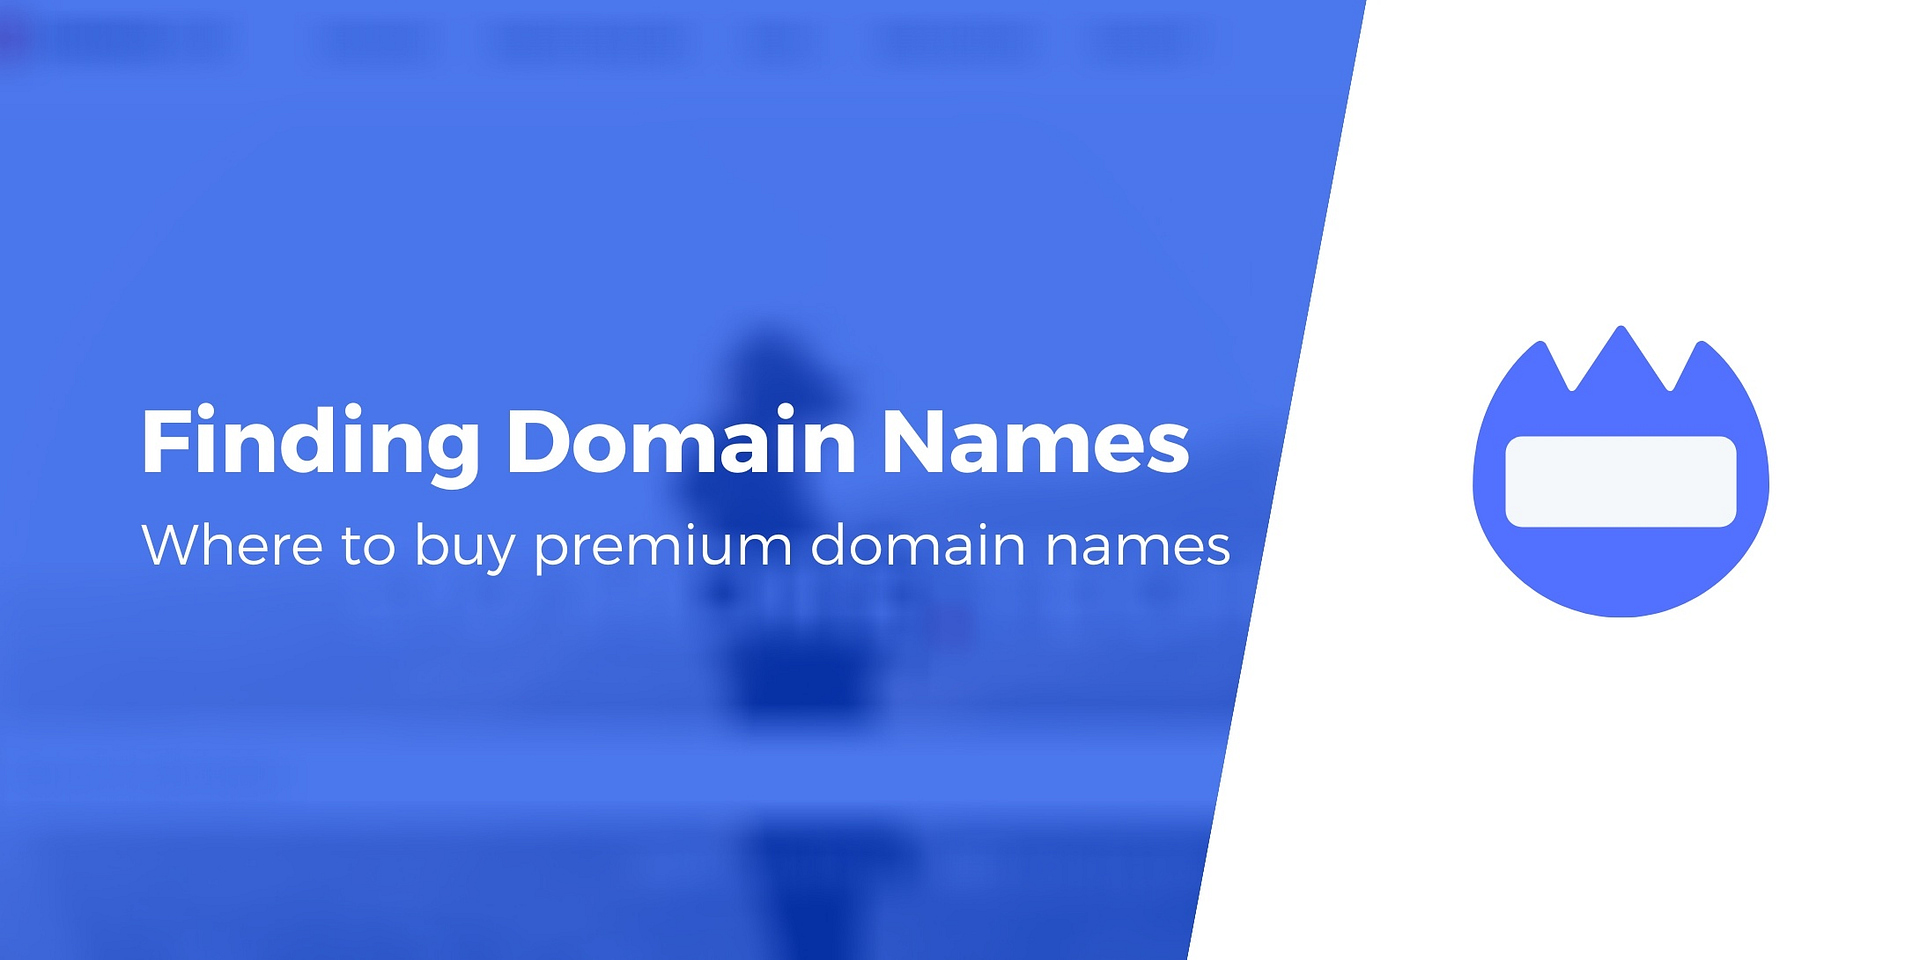 Domain Names For Sale - Expert Web Design & Internet Marketing Services - Internet Gorillas